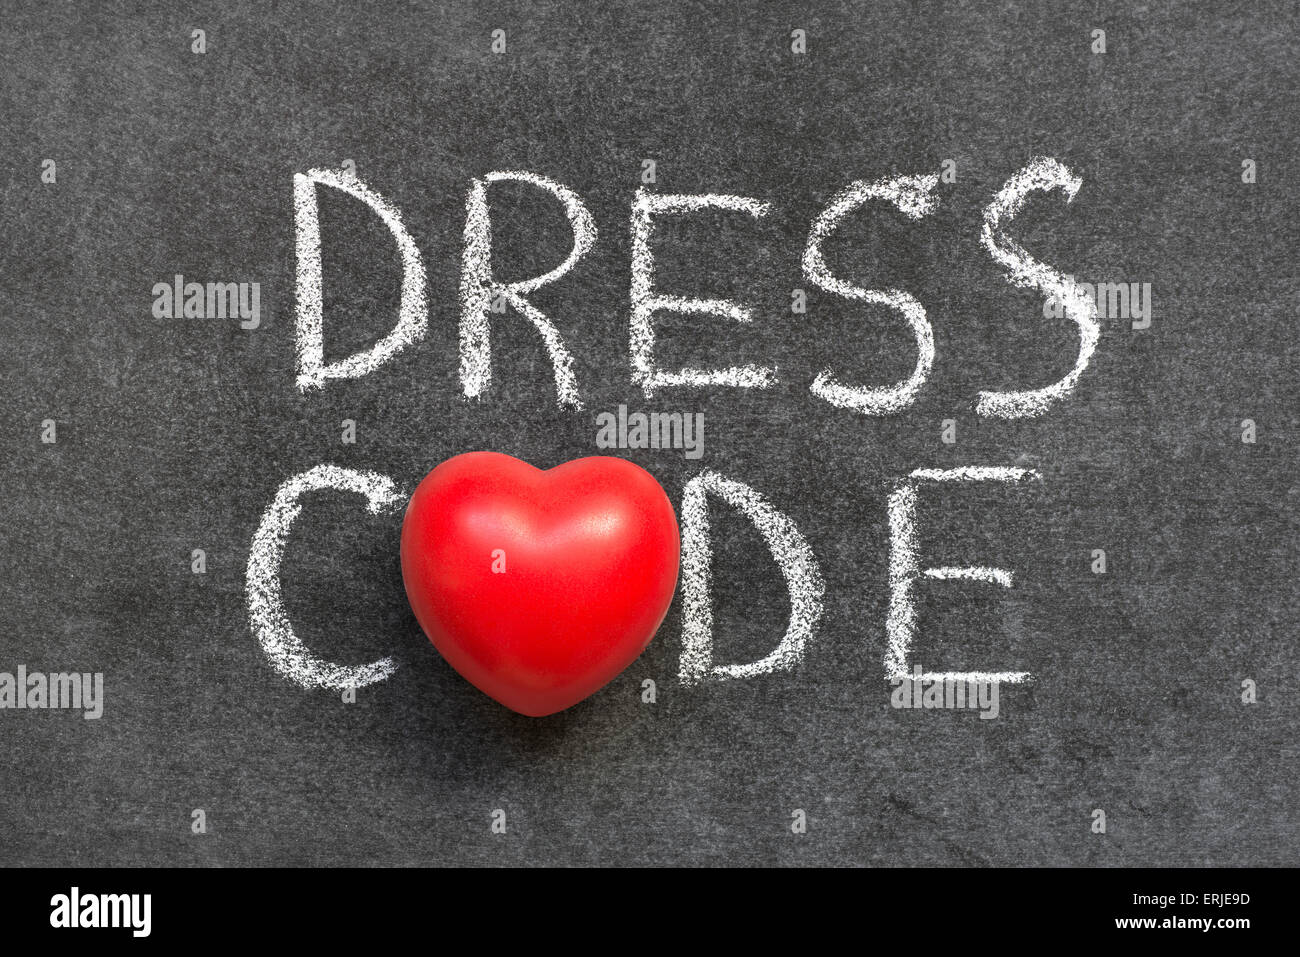 dress code phrase handwritten on blackboard with heart symbol instead of O Stock Photo